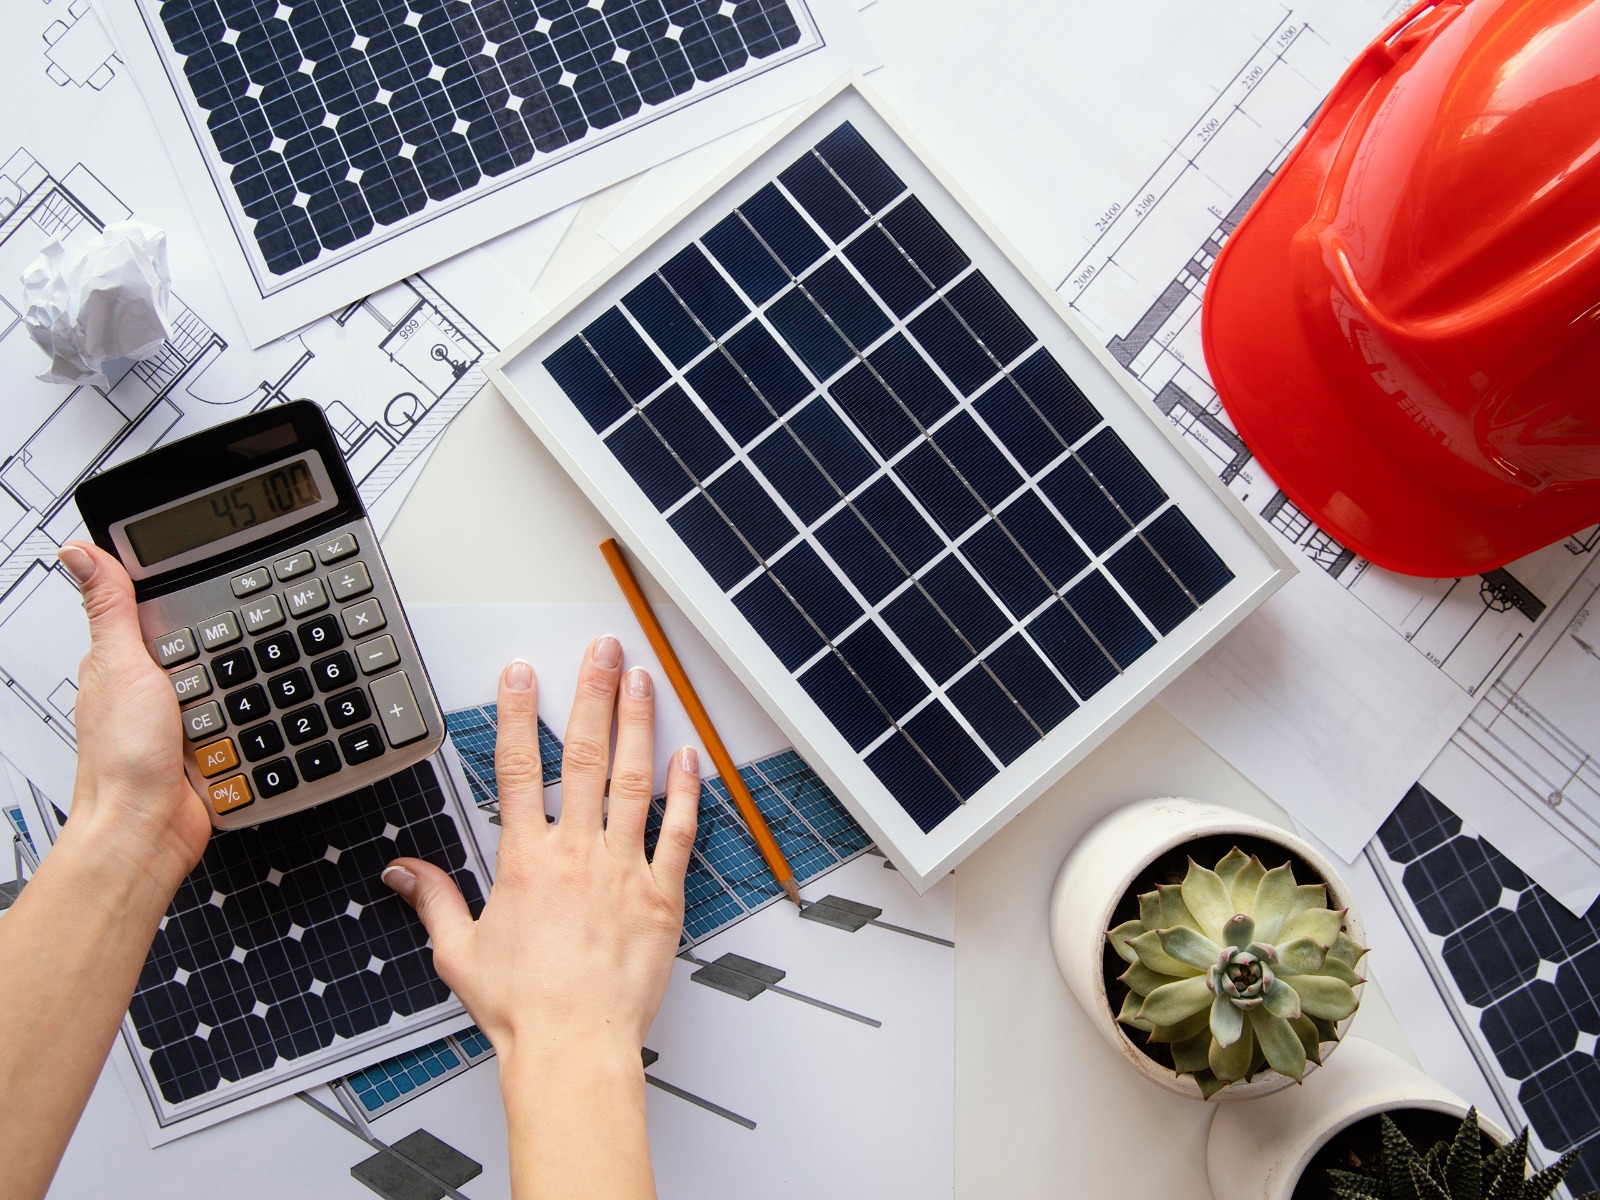 36-million-for-solar-panel-rebates-announced-sun-electrical-ltd